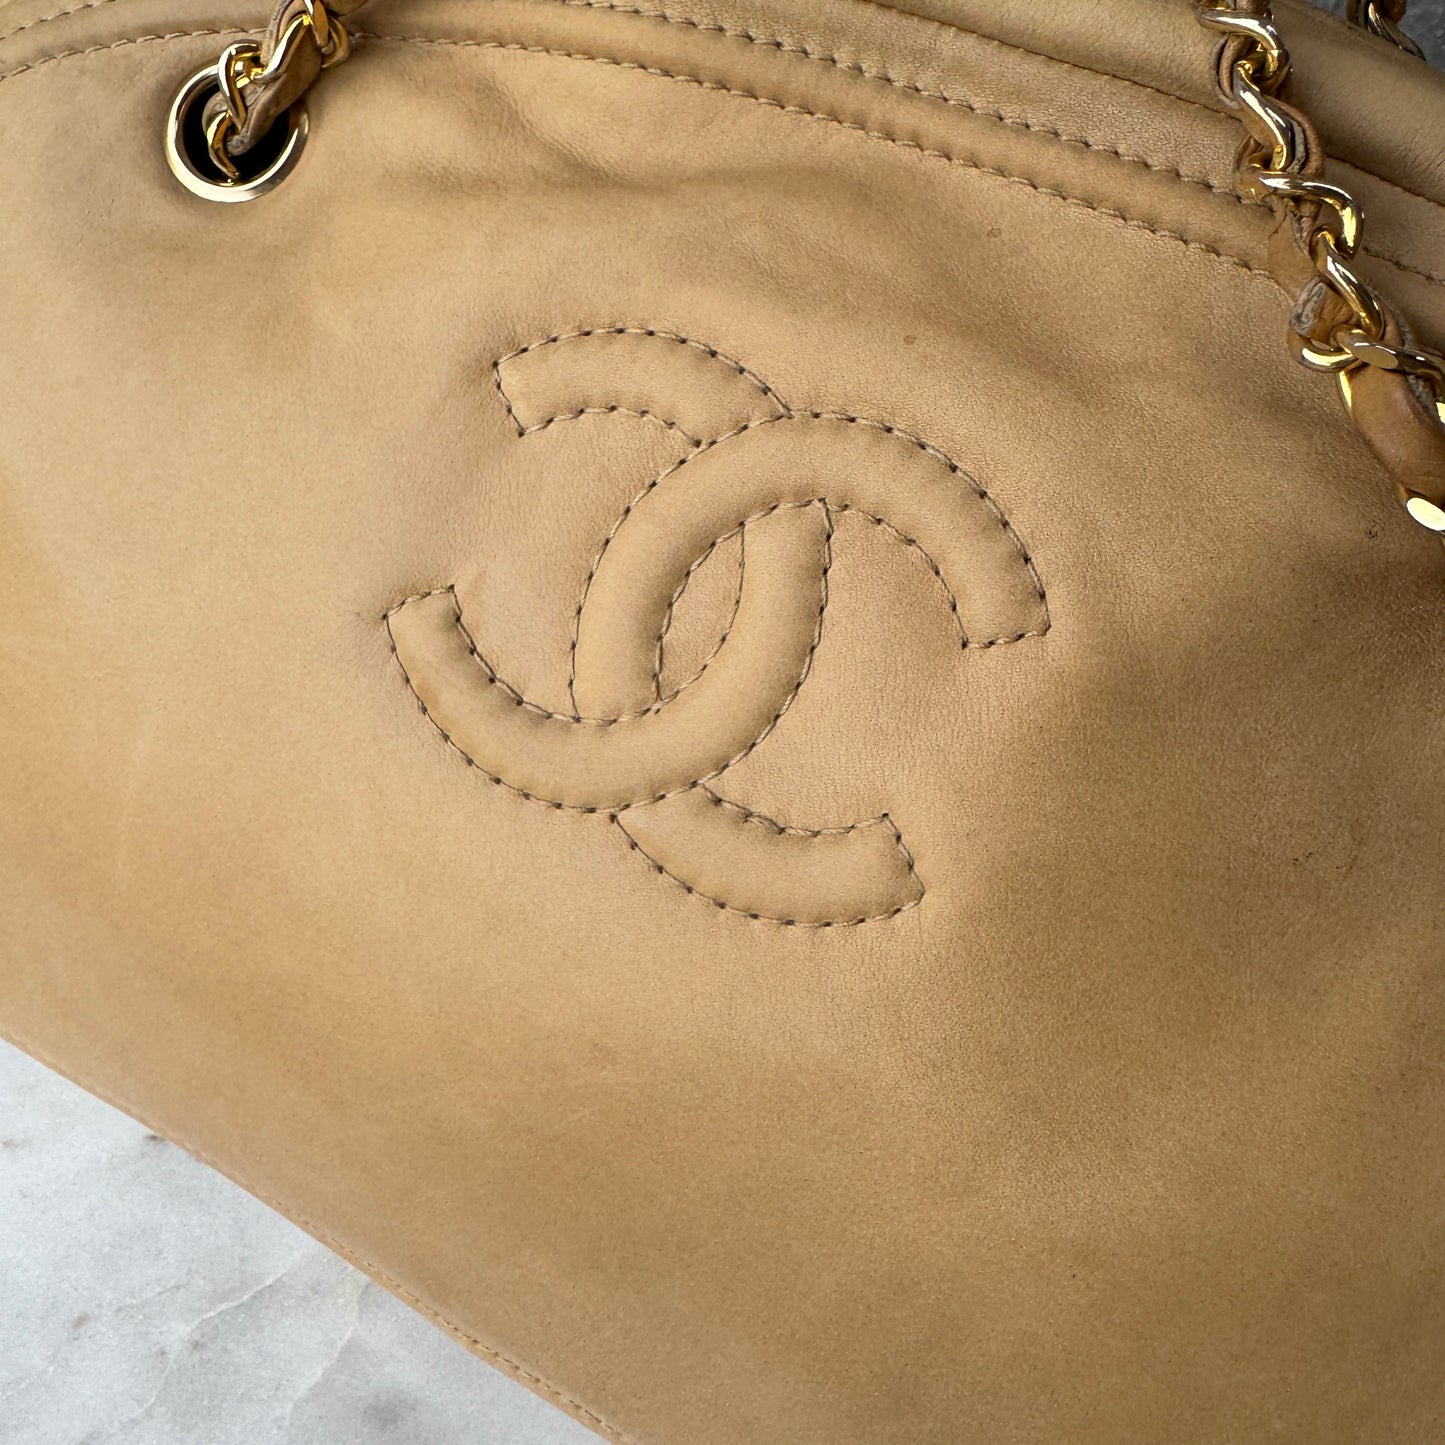 Chanel Vintage CC Chain Leather Shoulder Bag